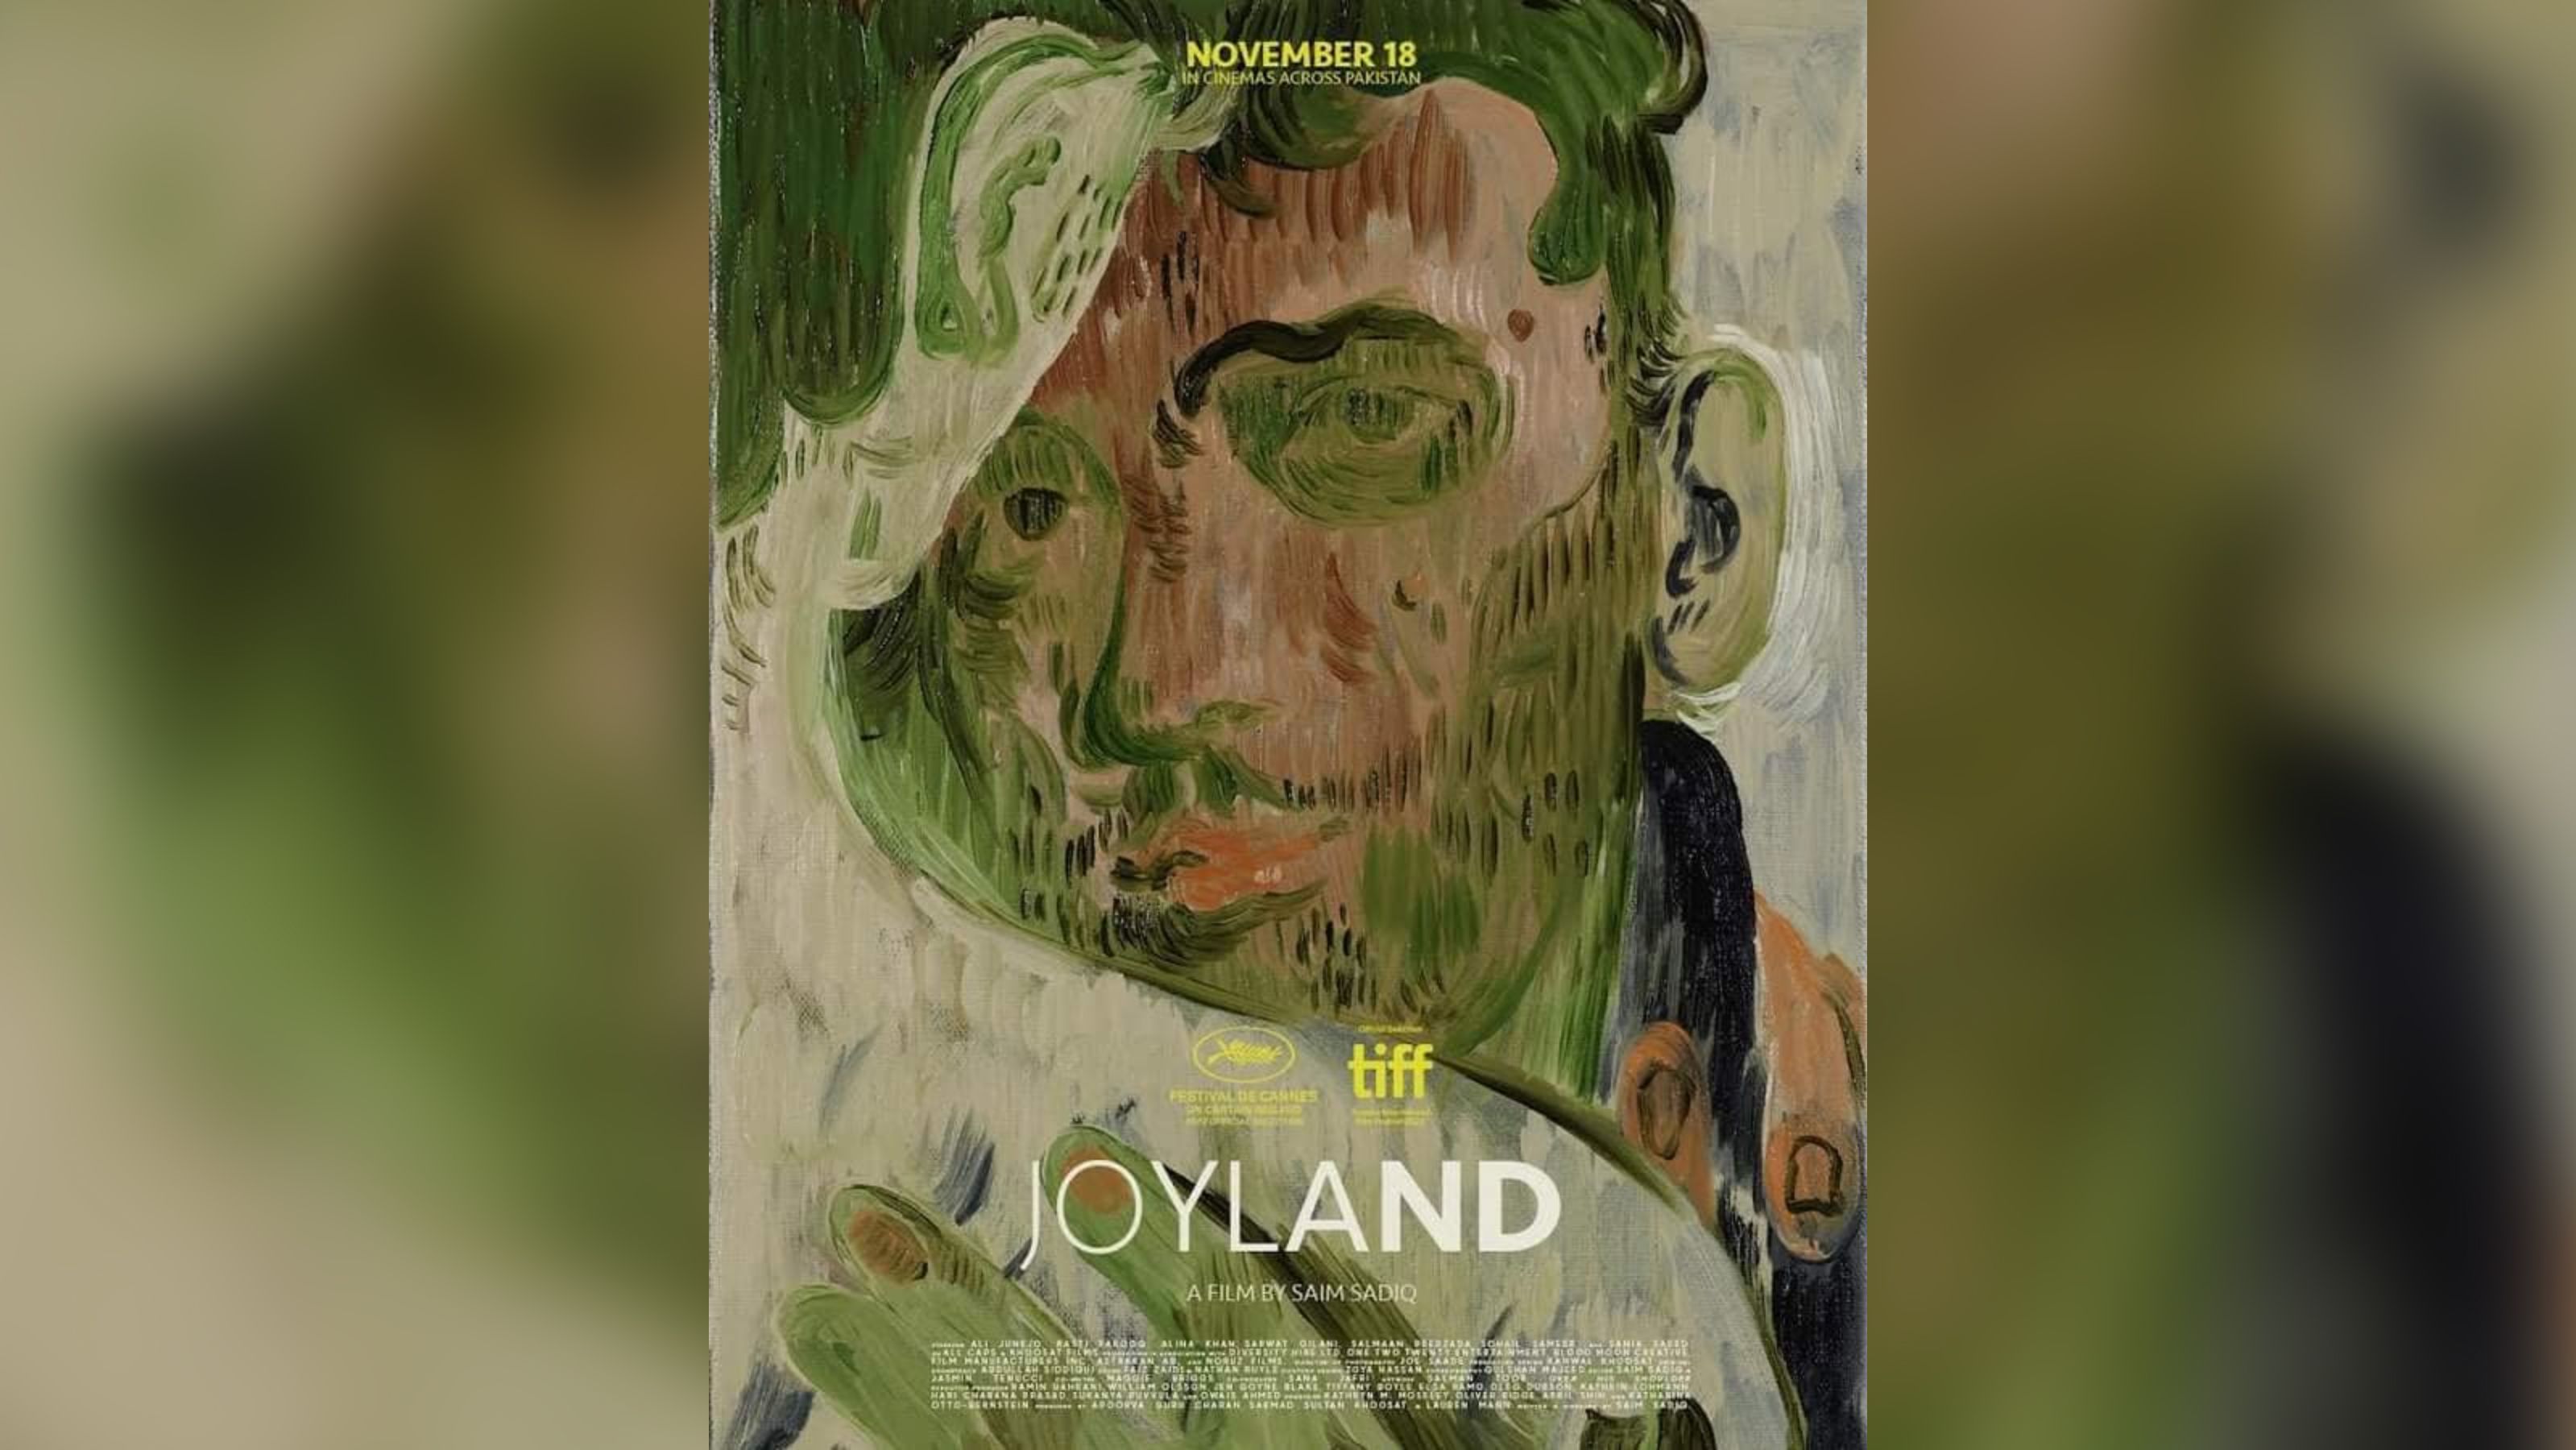 Pakistan withdraws permission for release of Oscar-contender 'Joyland'